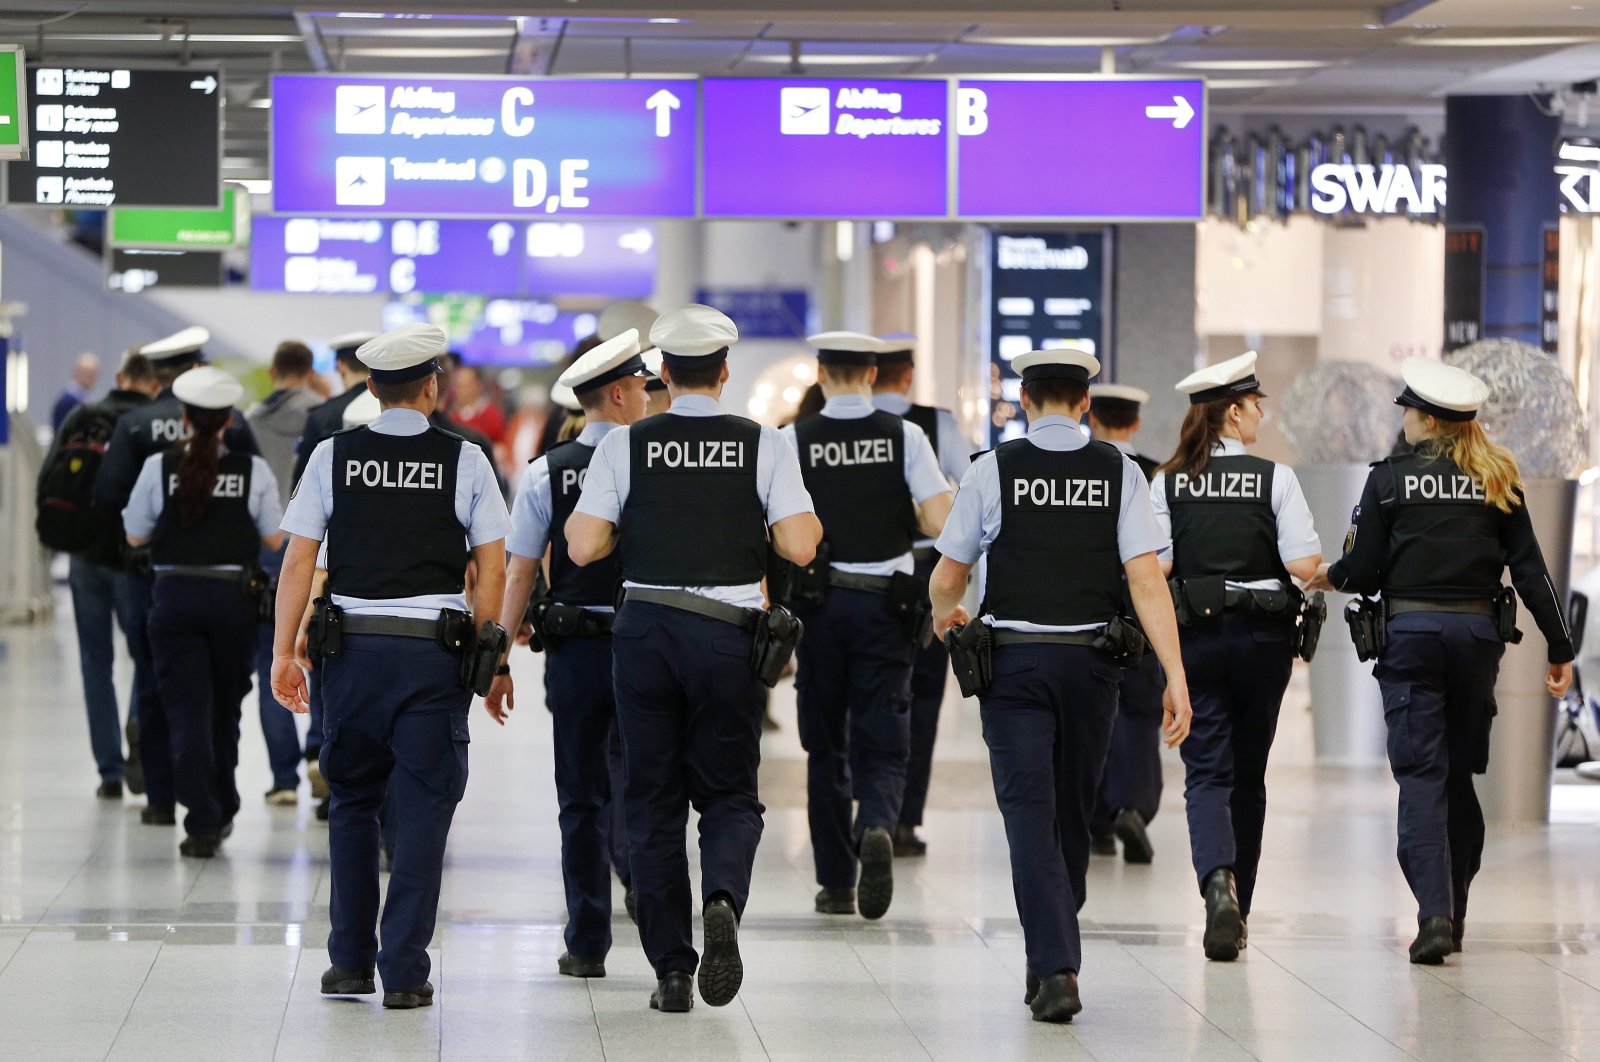 German police officers walk in an airport terminal, Frankfurt, March 23, 2016. (AP Photo)